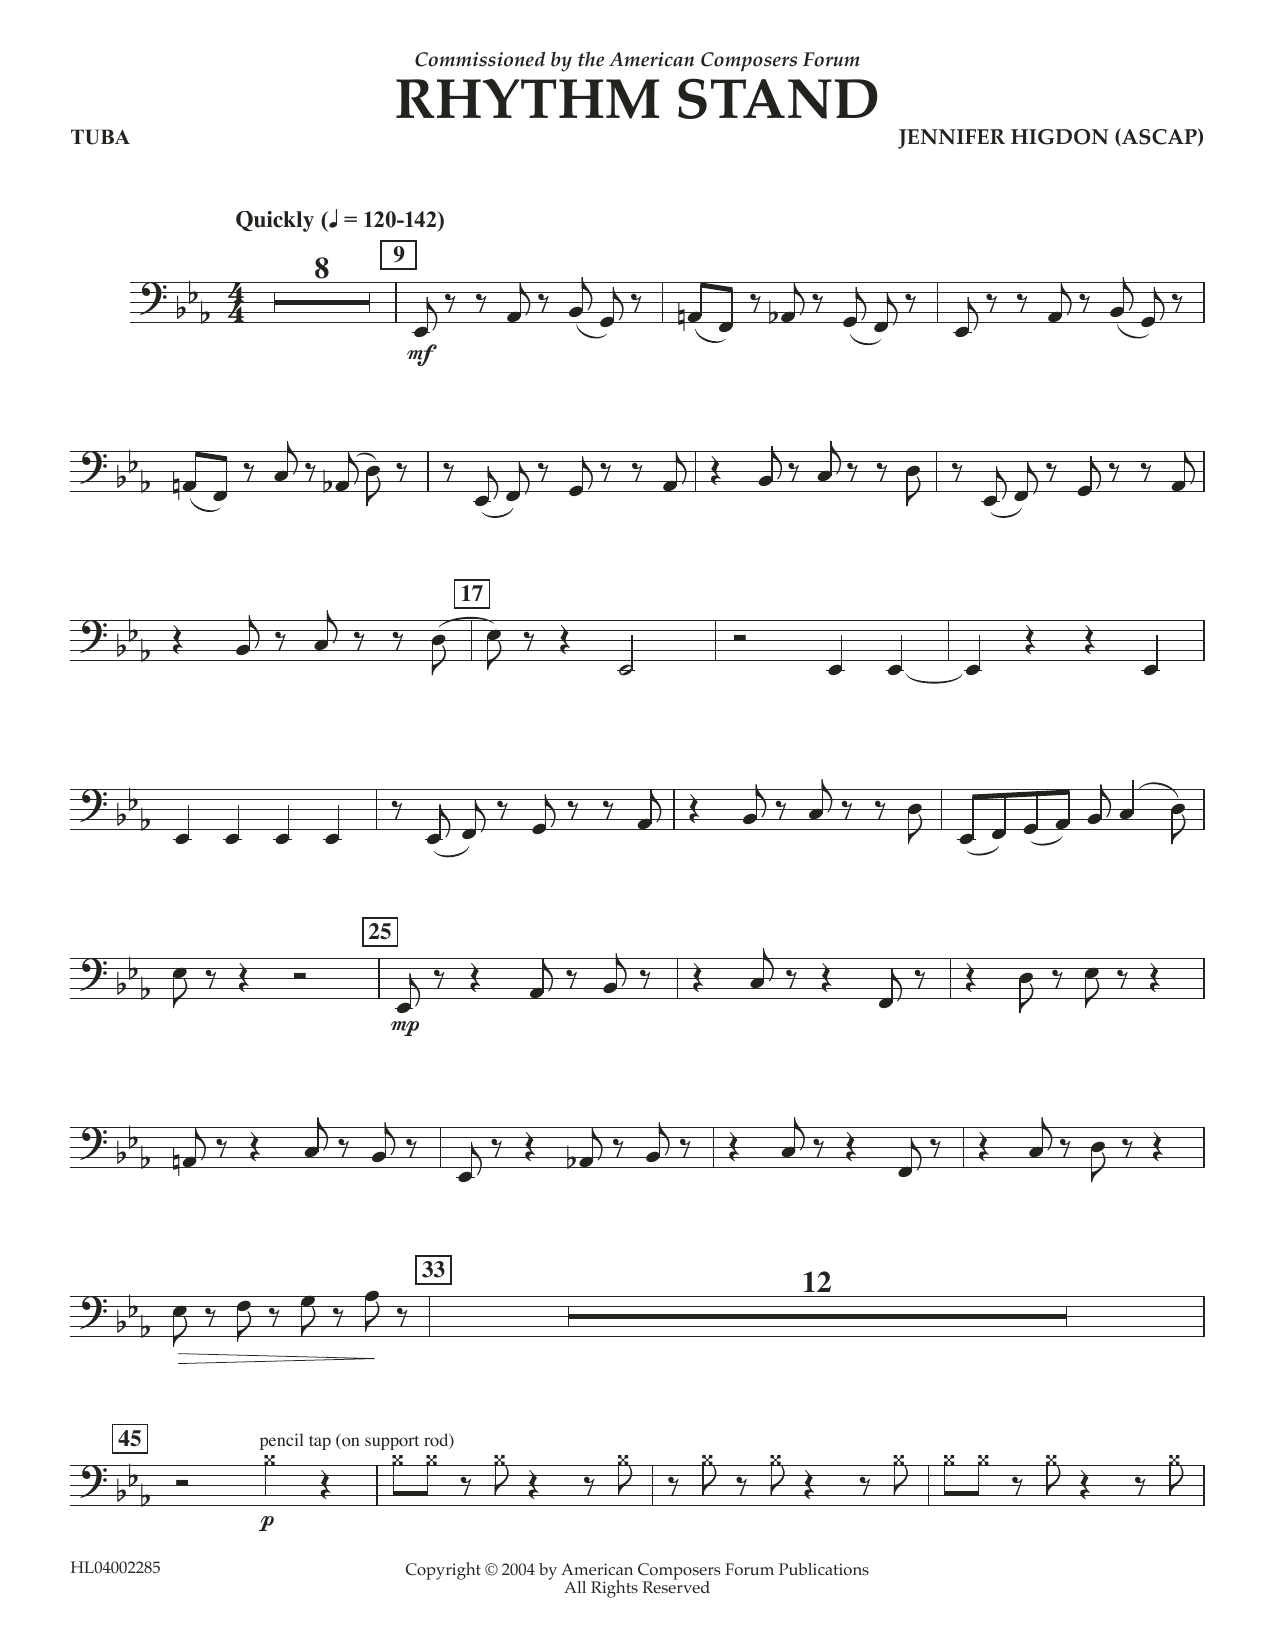 Jennifer Higdon Rhythm Stand - Tuba Sheet Music Notes & Chords for Concert Band - Download or Print PDF